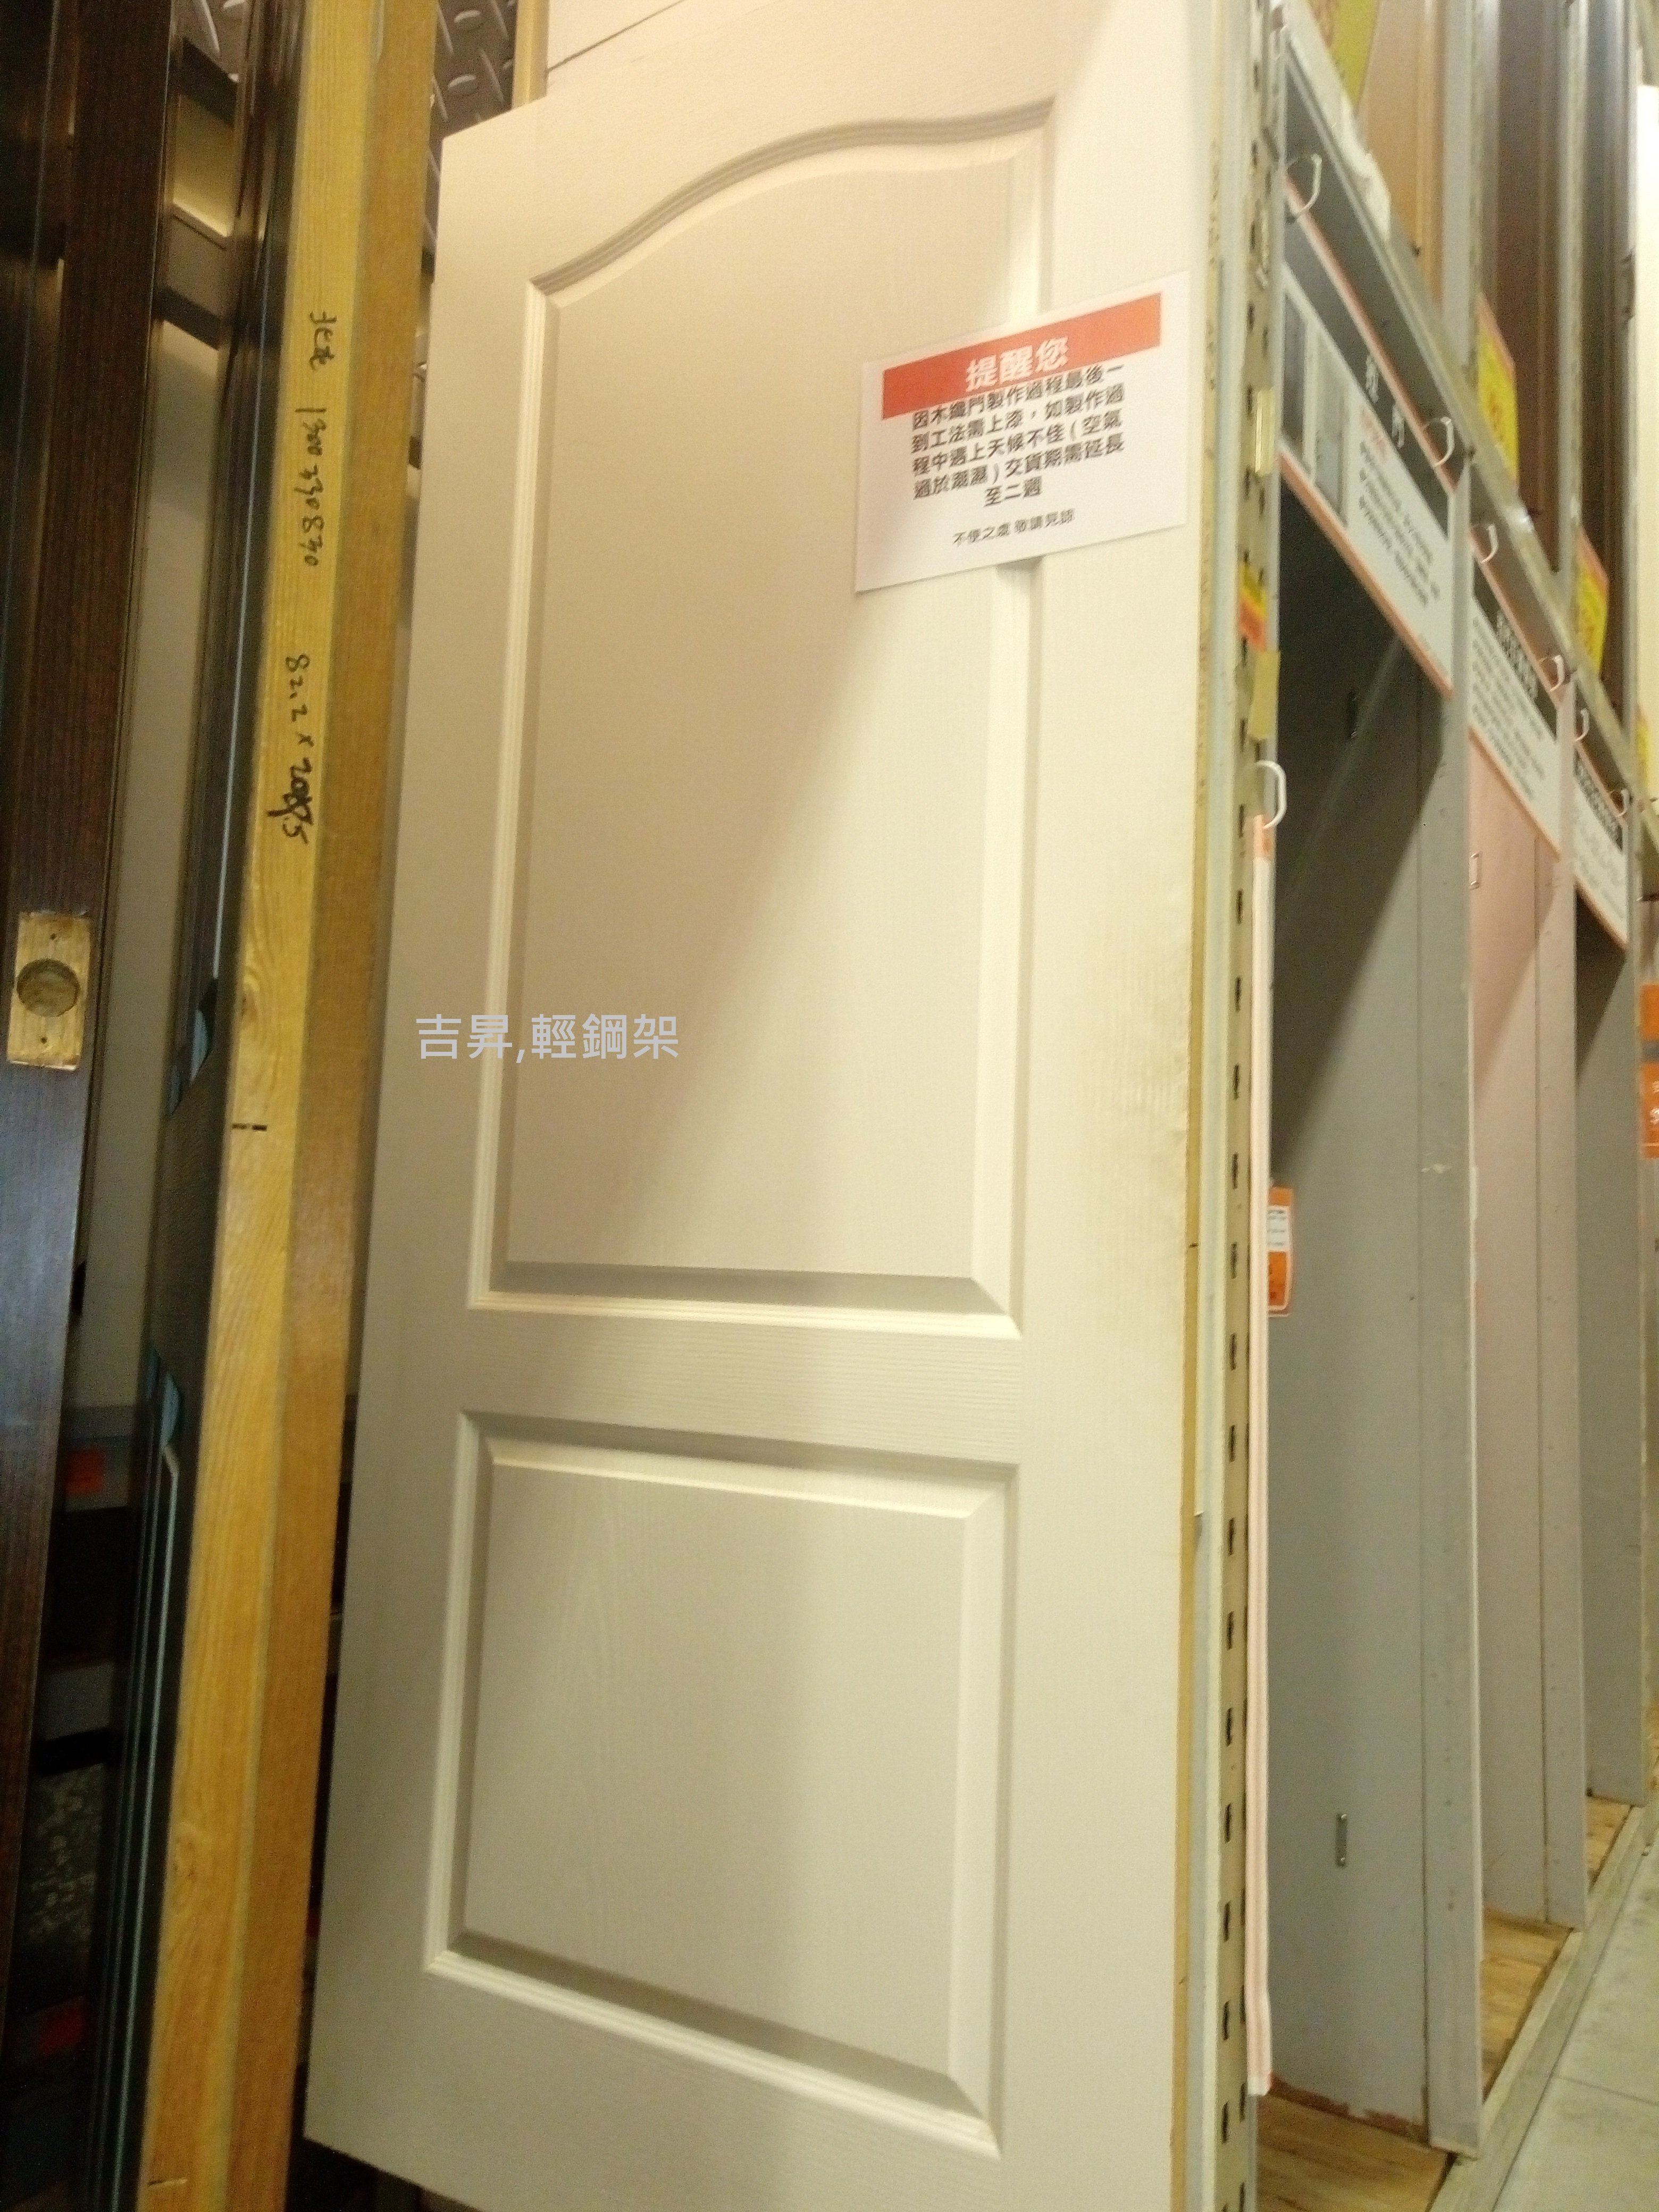 吉昇-木纖門-Wooden door - kx915803cr